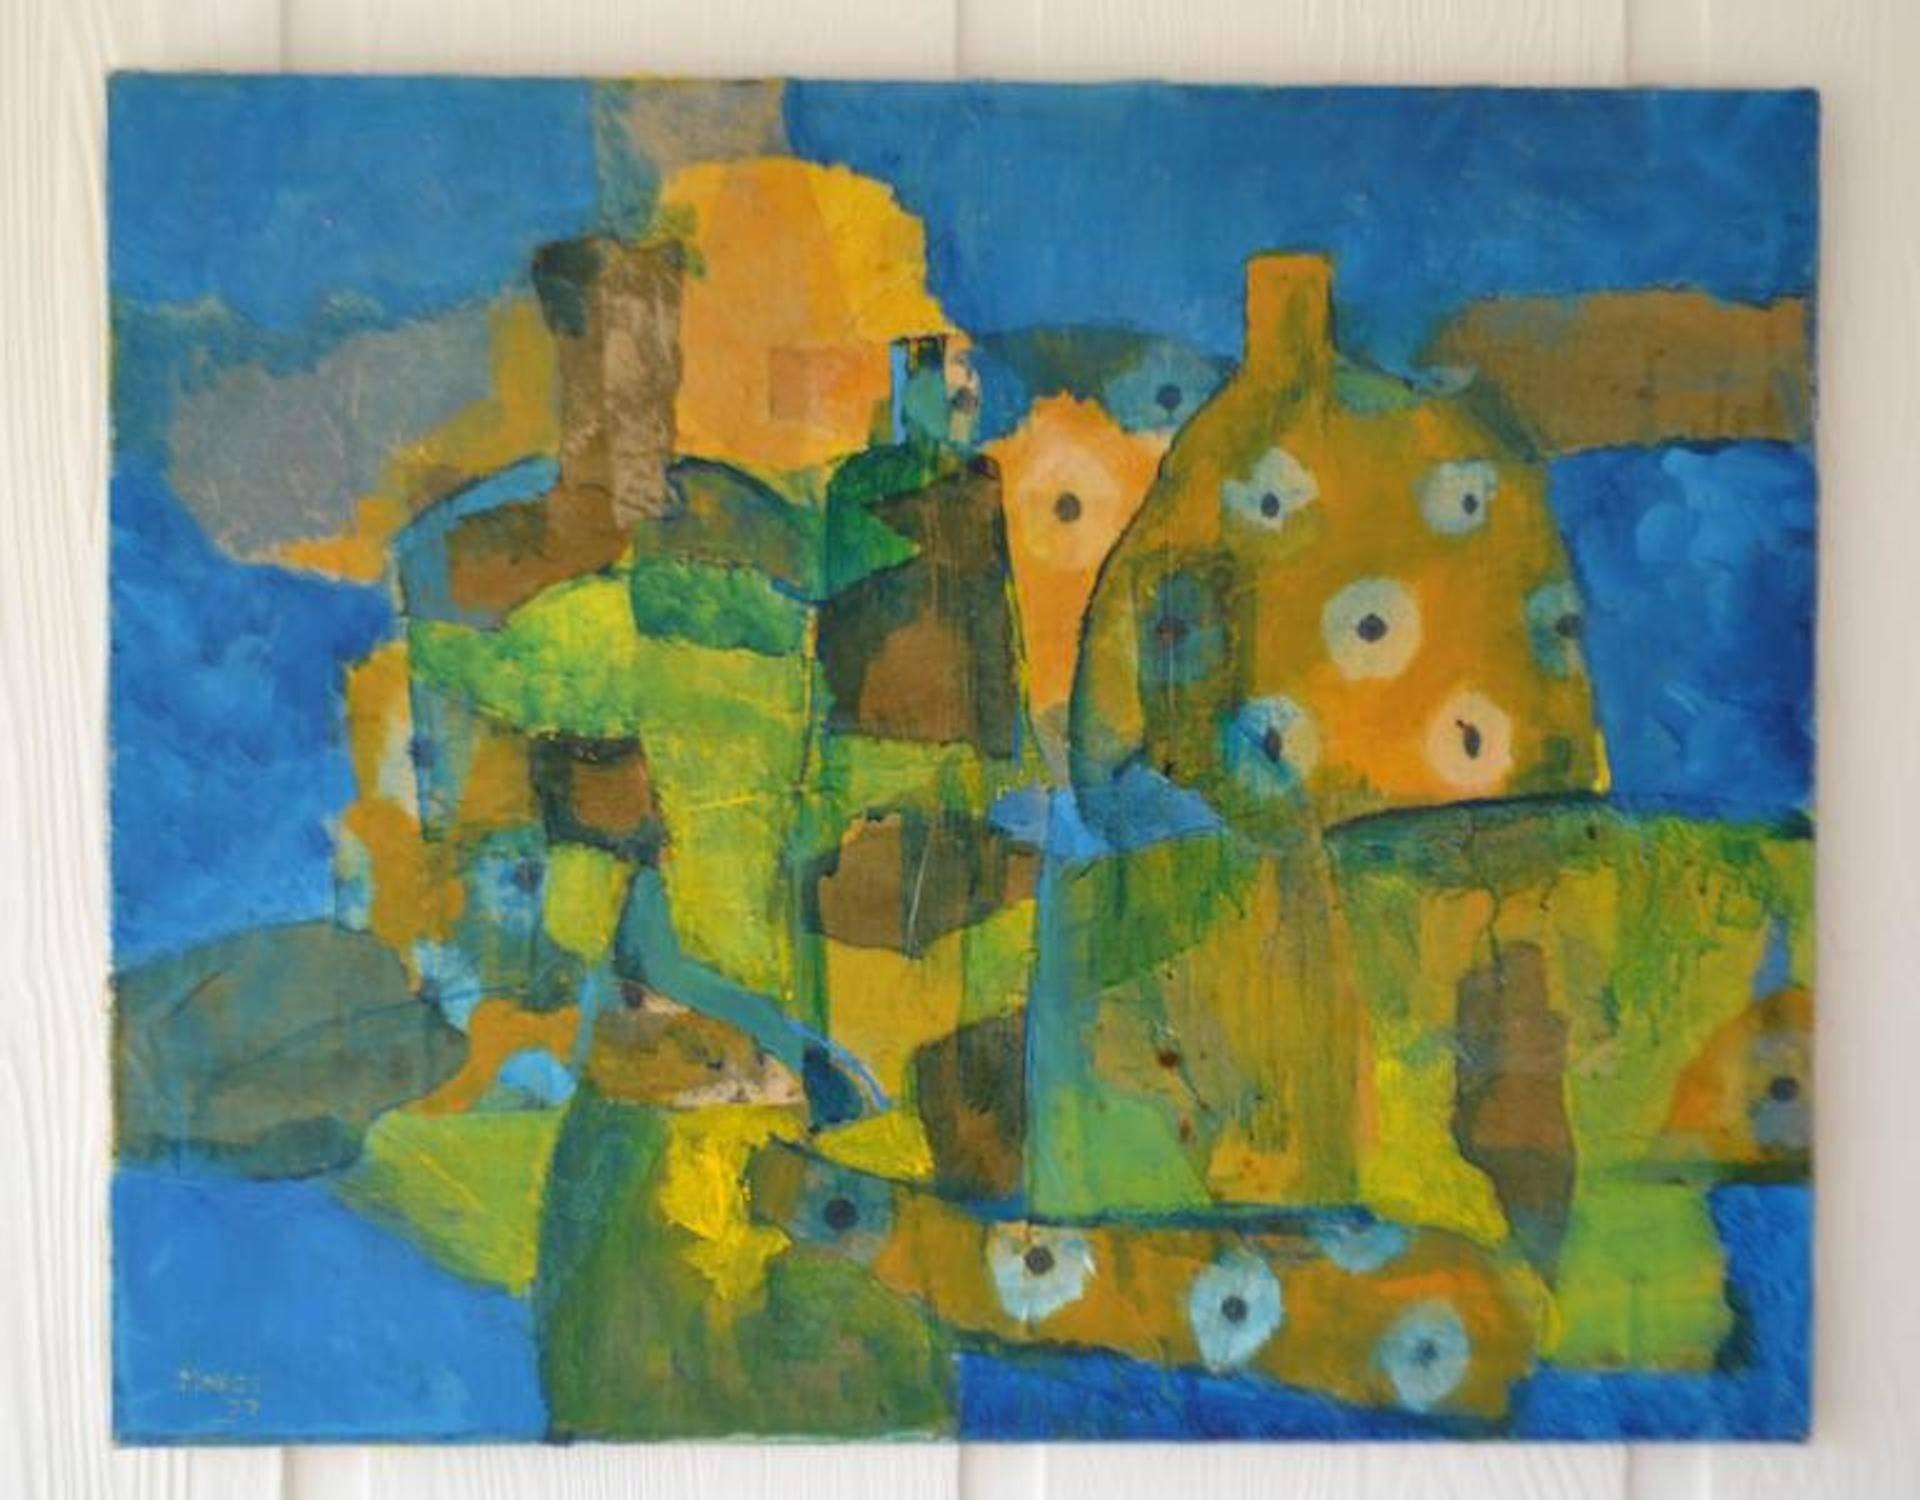 Striking midcentury abstract mixed-media on canvas, circa 1977.